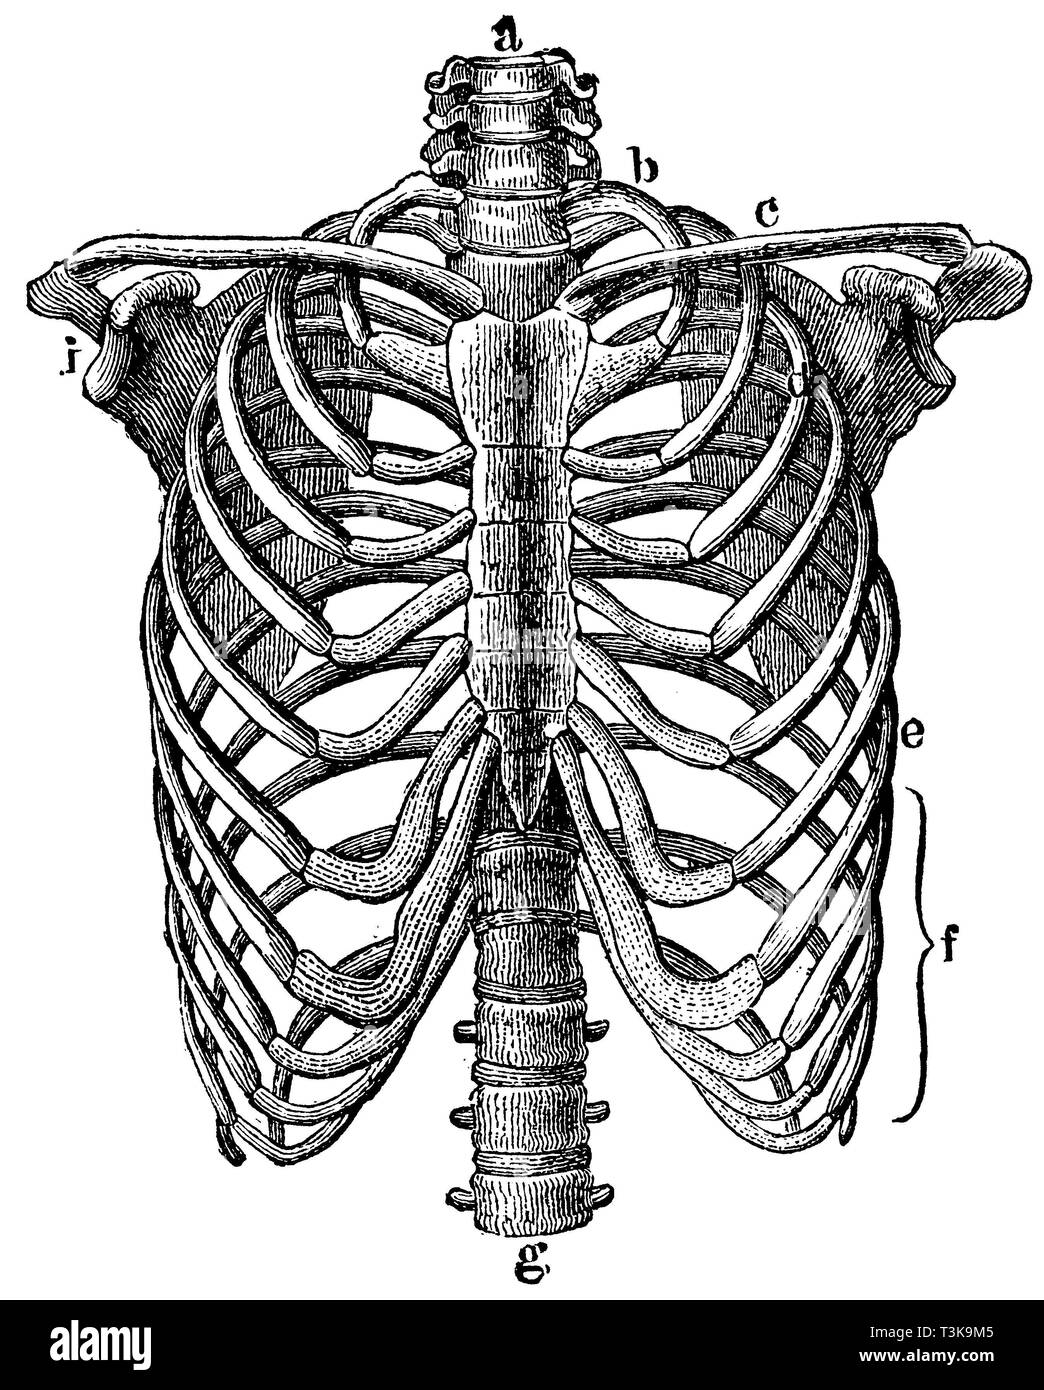 Human thorax: a, g) Spine, b) First rib, c) Collarbone, d) Third rib, e) Seventh rib, f) False ribs, h) Sternum, i) Shoulder blade, anonym  1877 Stock Photo